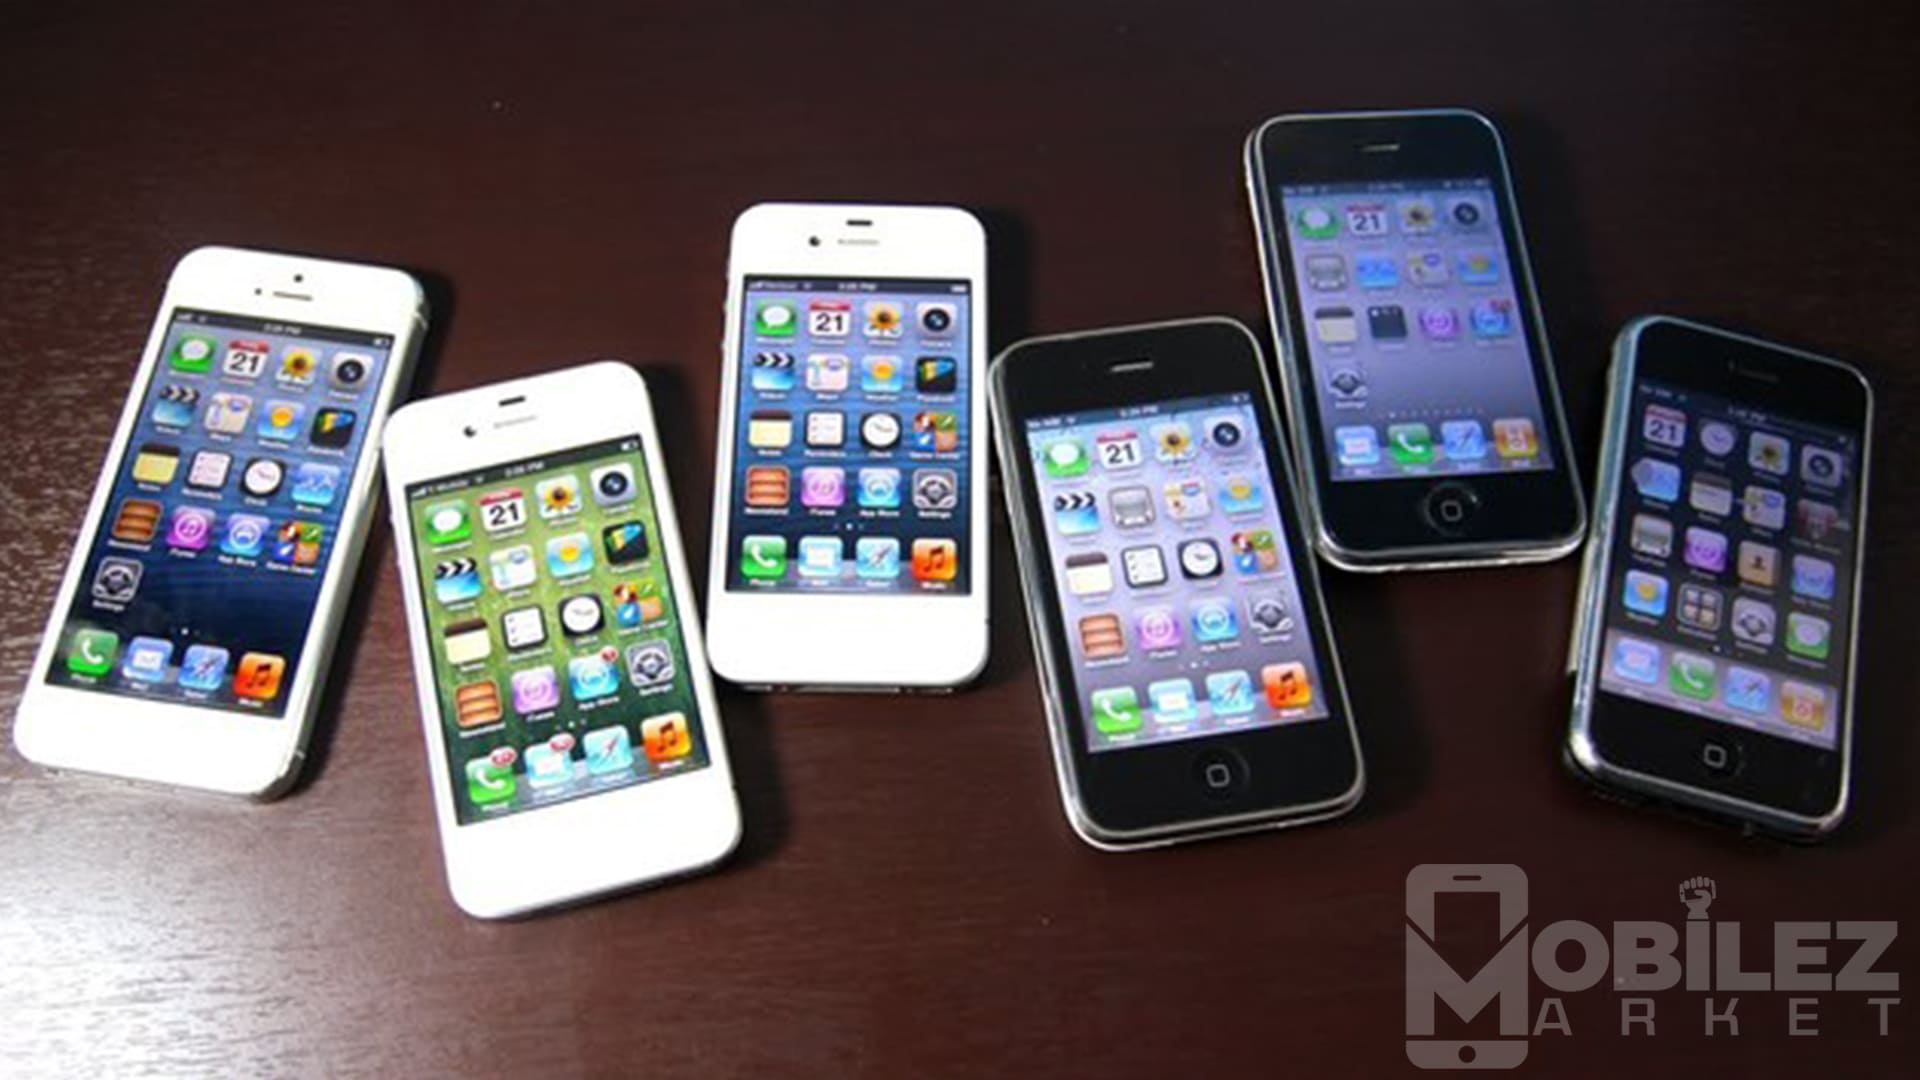 iPhone Mini Buy Online | iPhone Mobile Buy Online